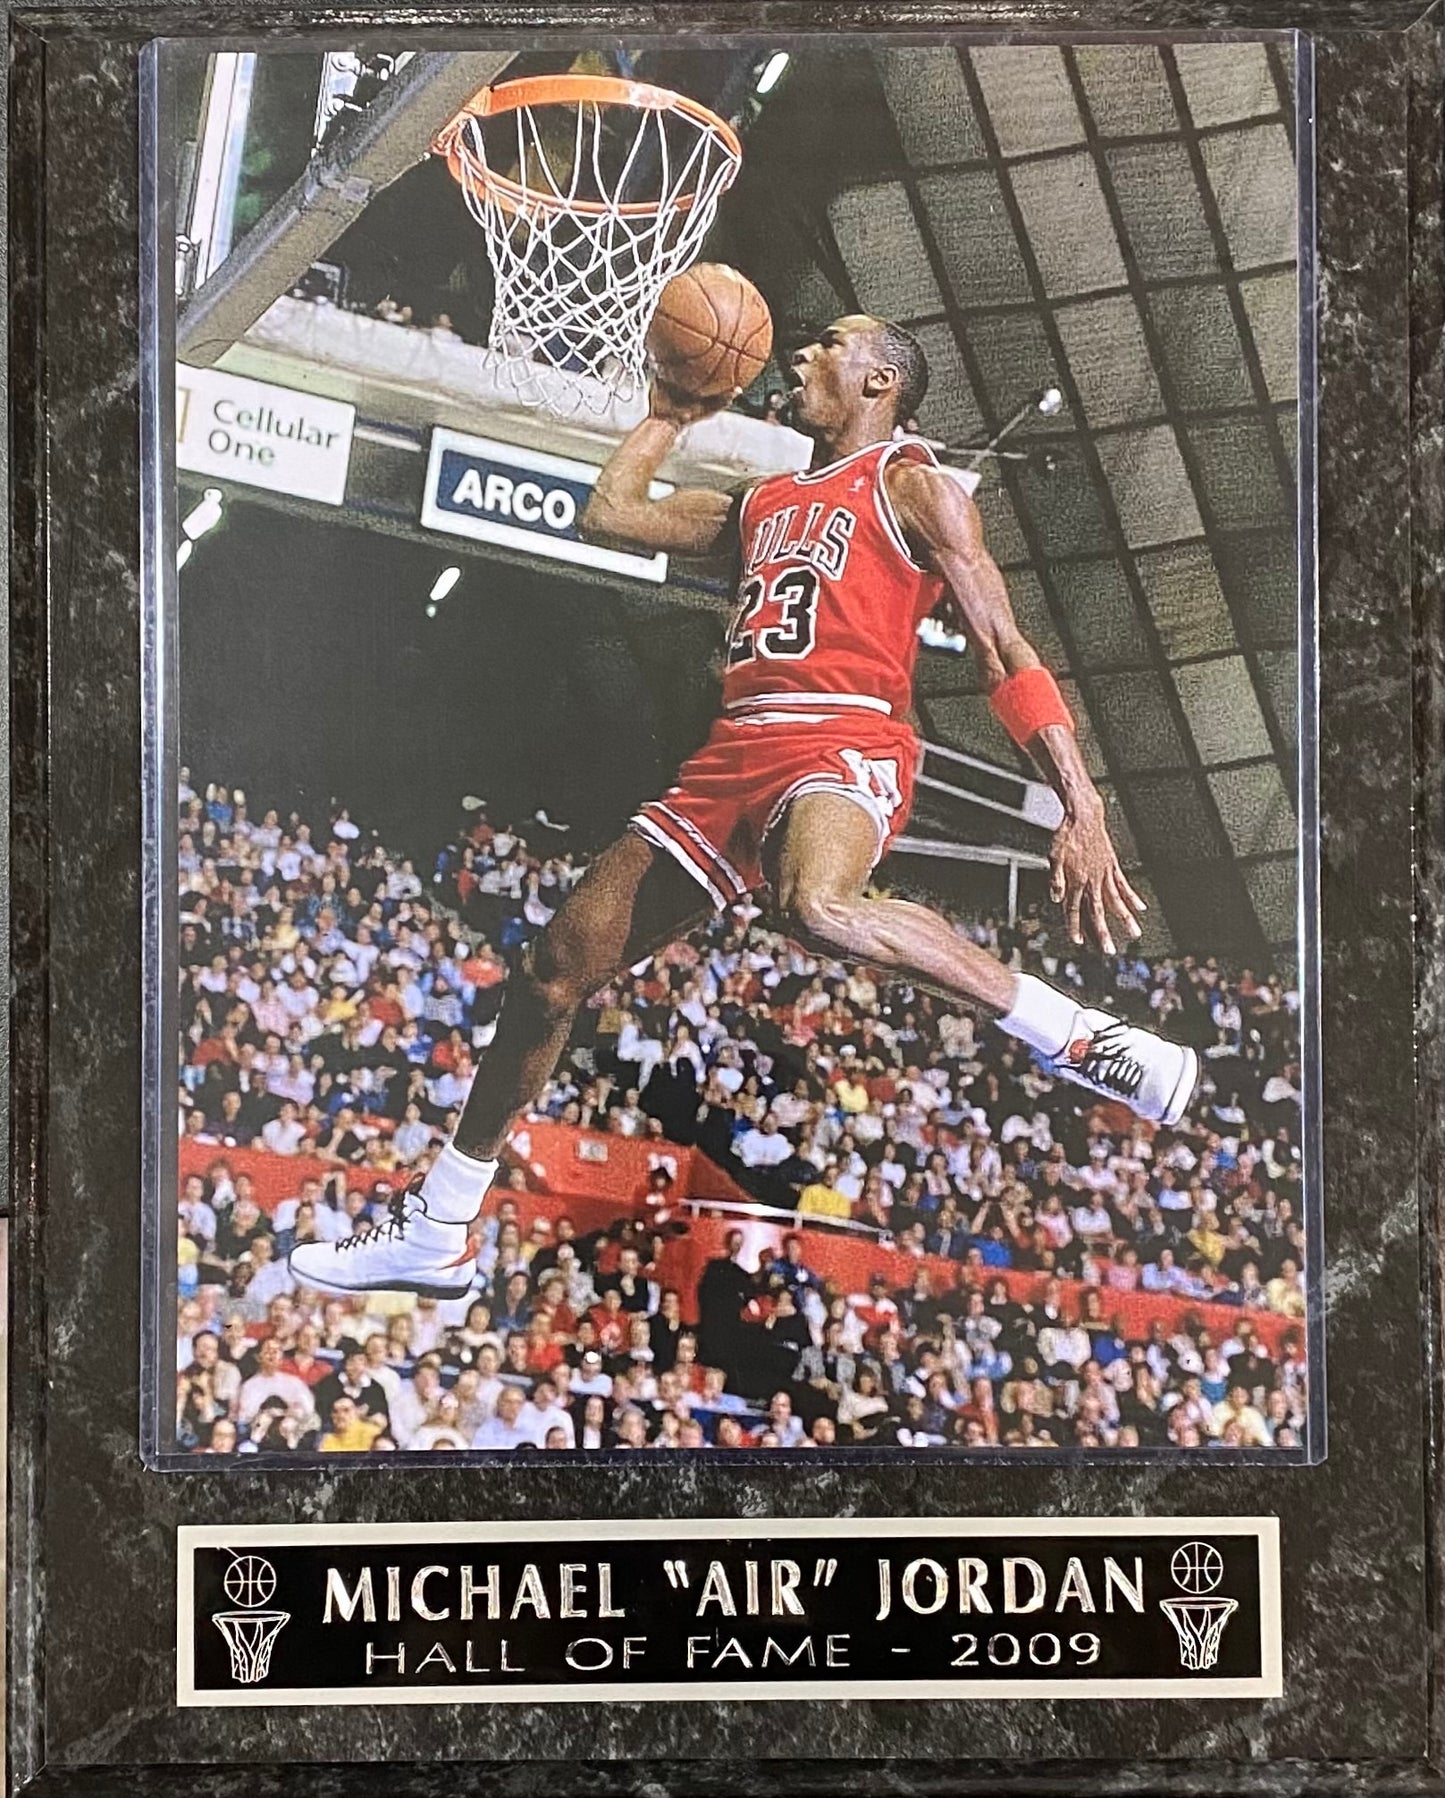 Michael "Air" Jordan Hall of Fame 2009 Chicago Bulls Wall Plaque